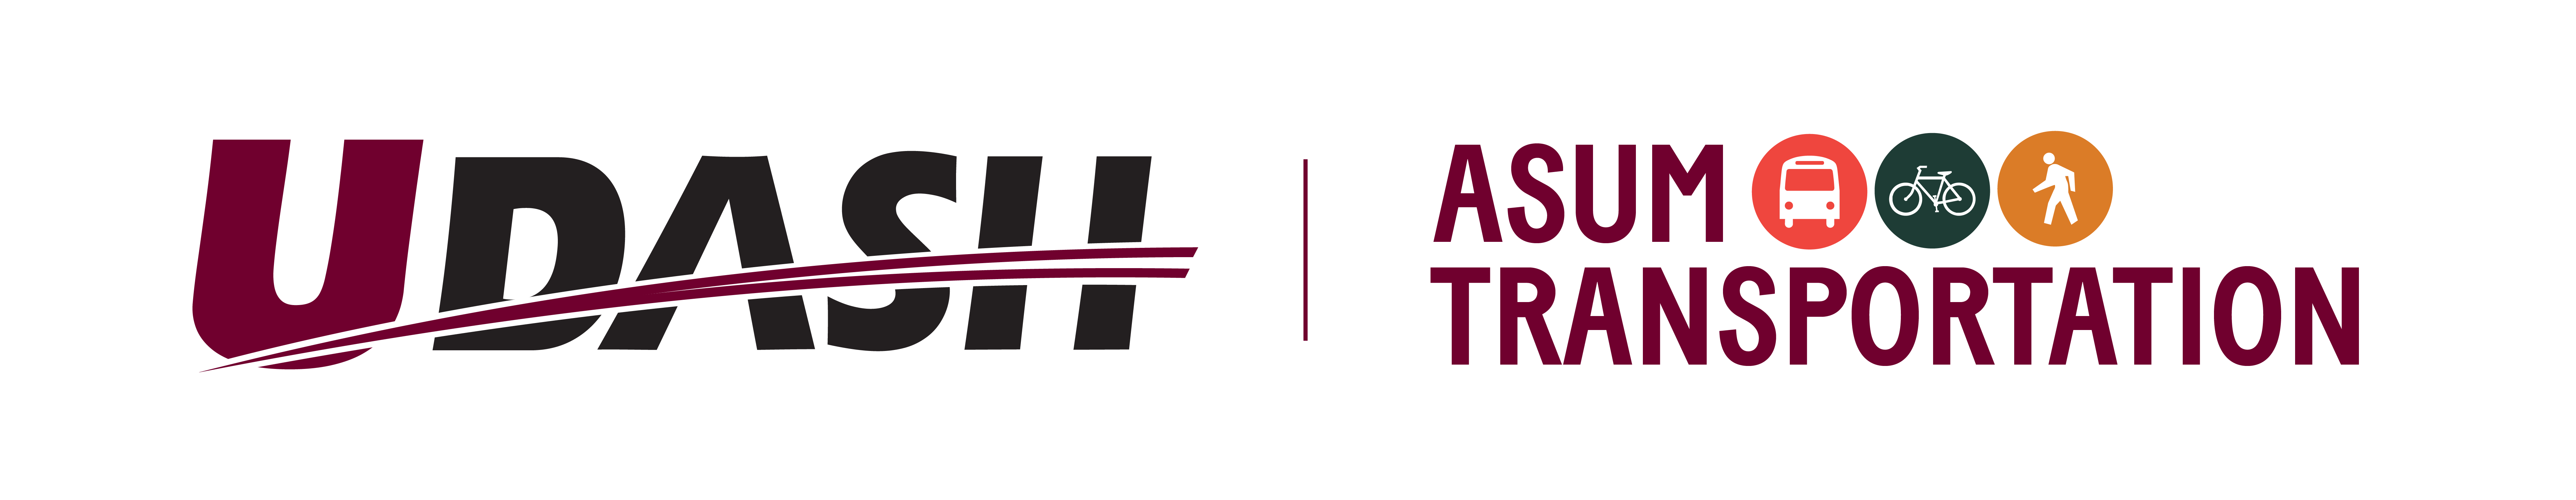 udash and ASUM Transportation Logos